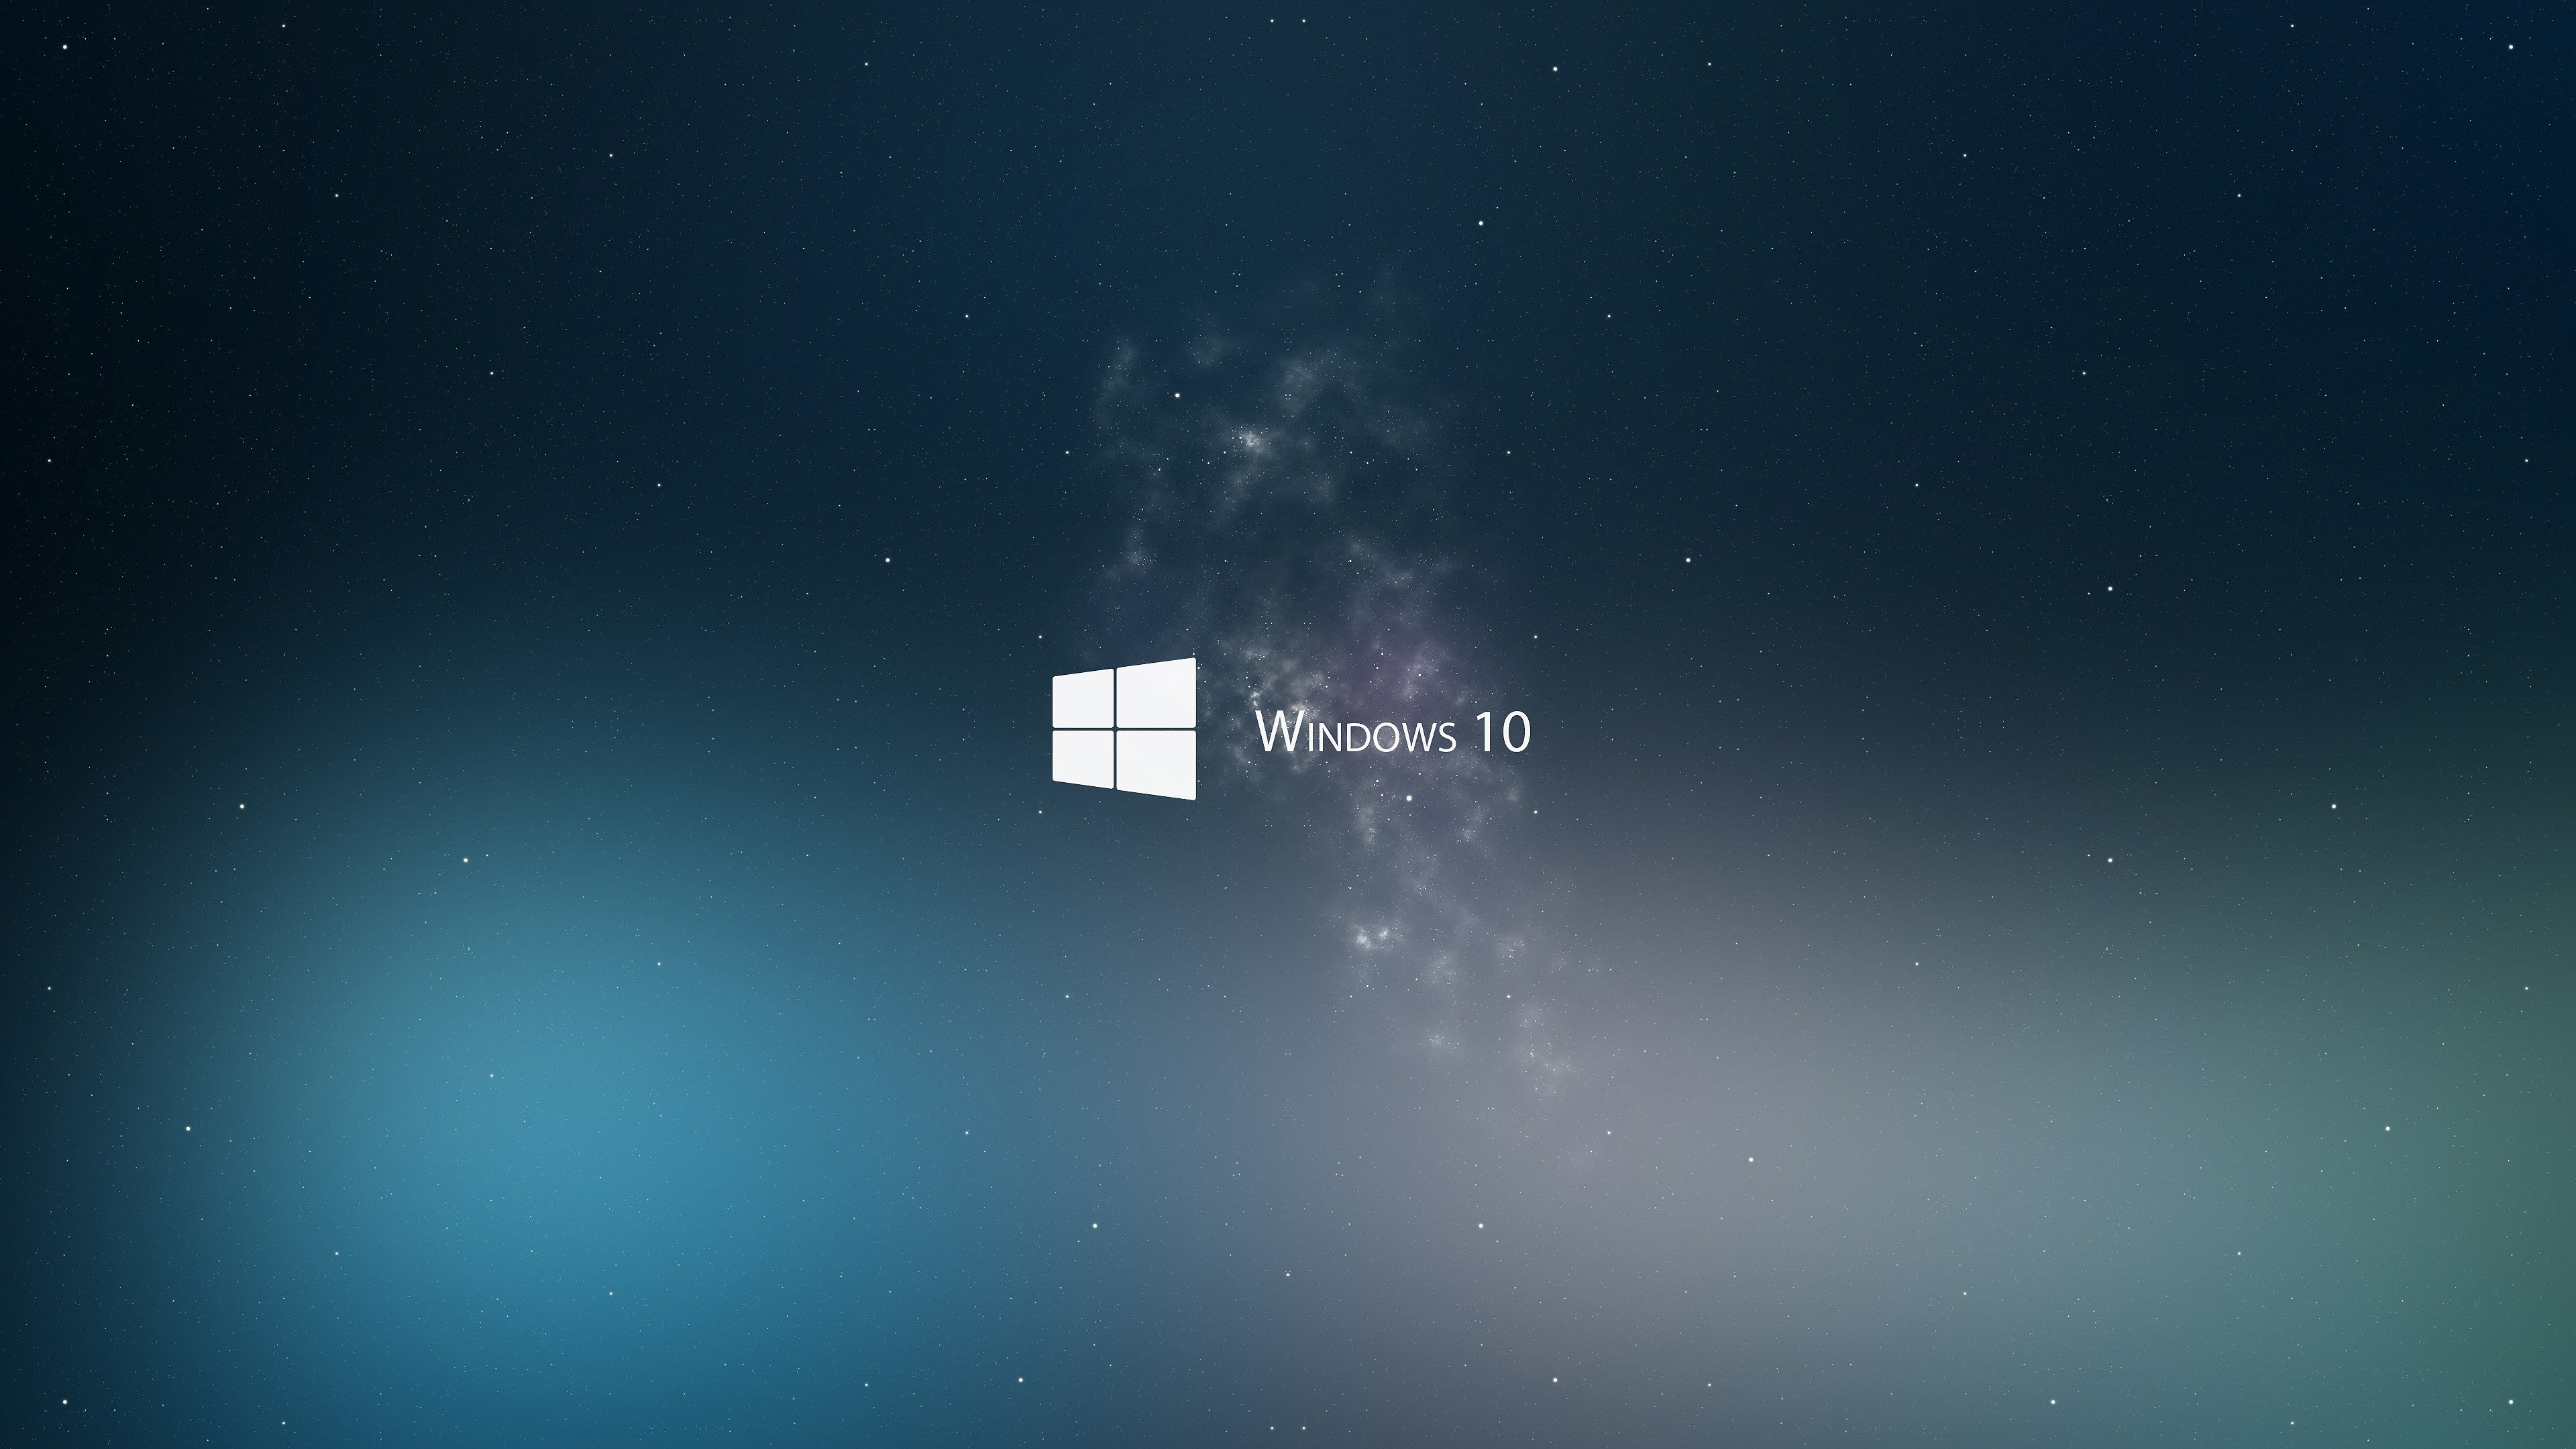 Windows 10, Graphic design Wallpaper